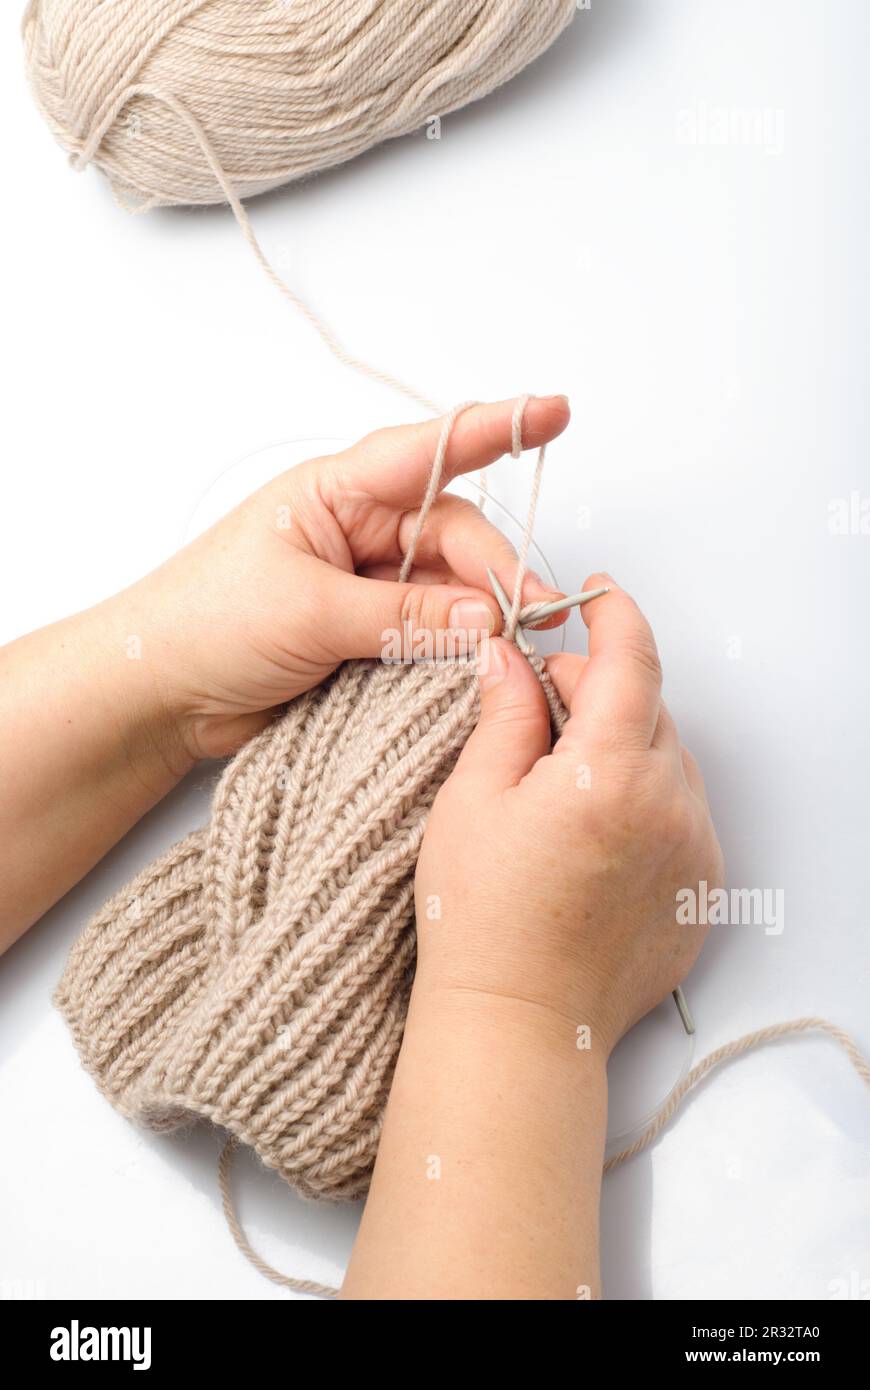 Knitting hands Stock Photo